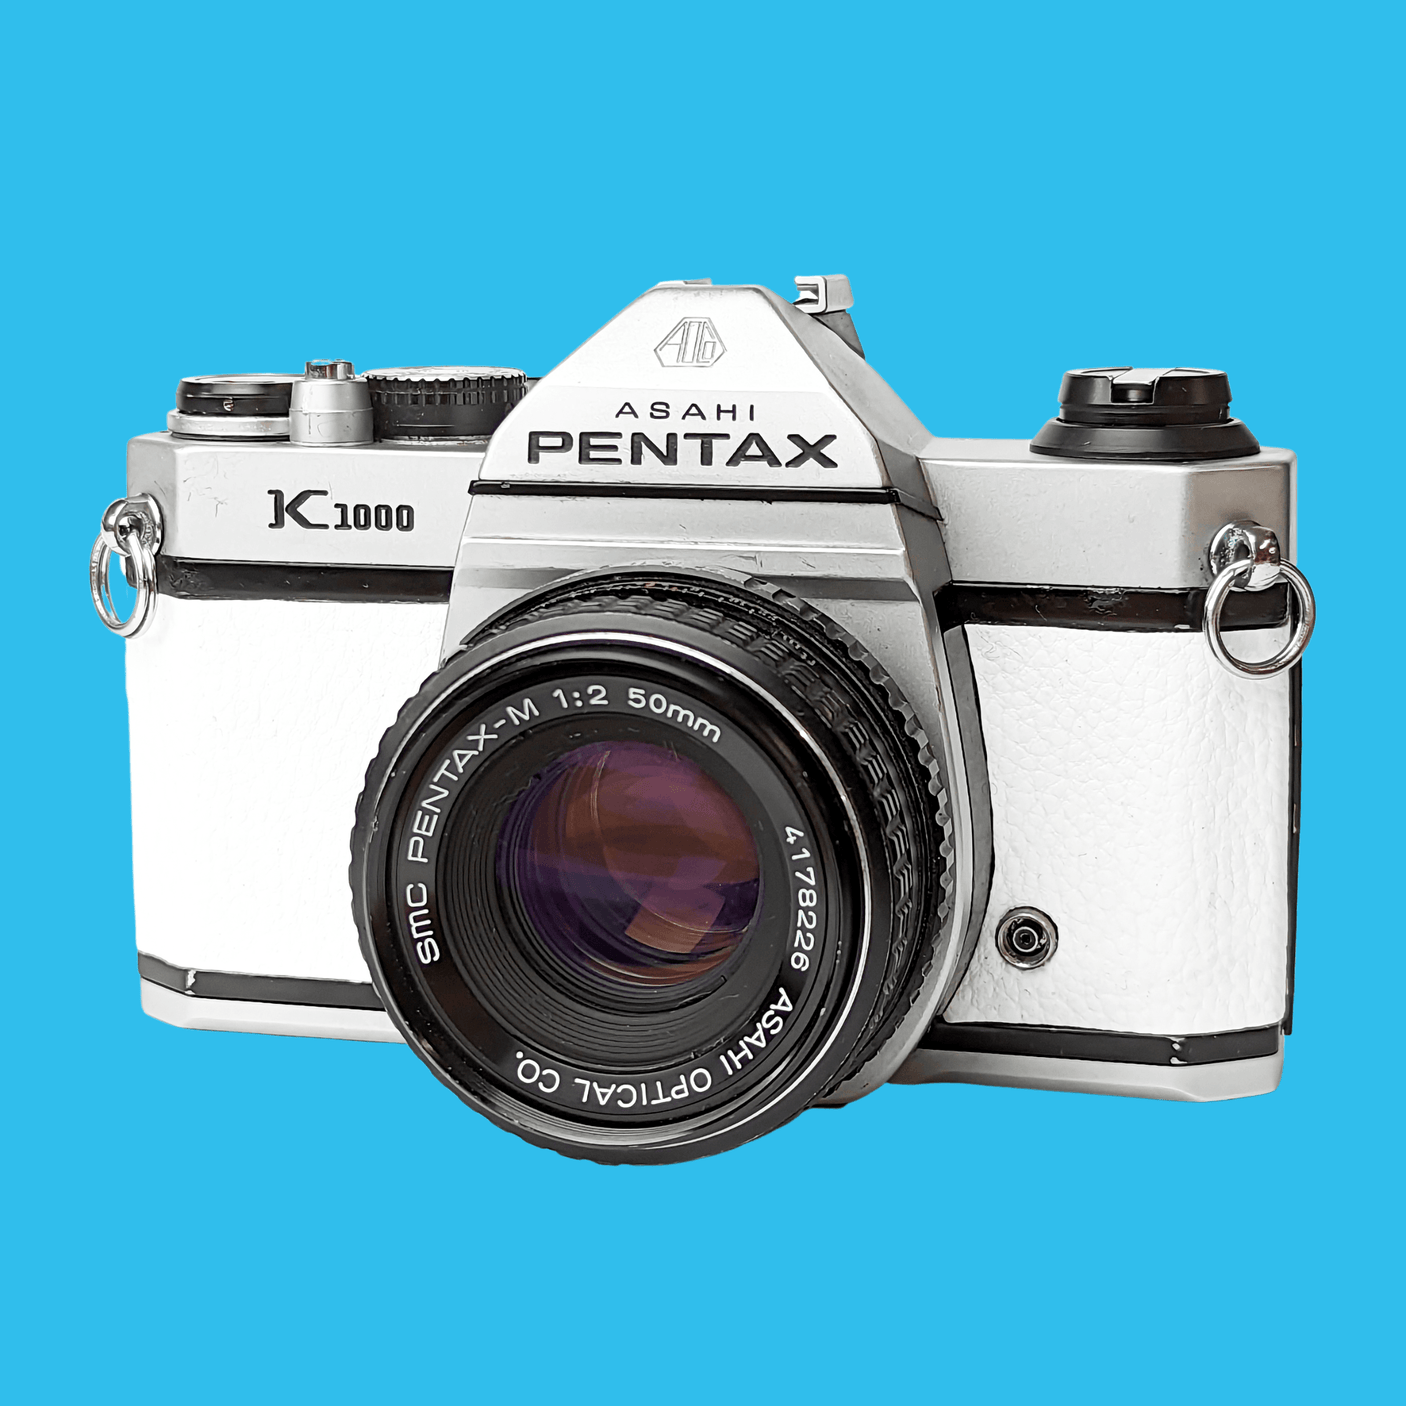 Pentax K1000 White Leather Vintage SLR 35mm Film Camera with Pentax f/2 50mm Prime Lens.